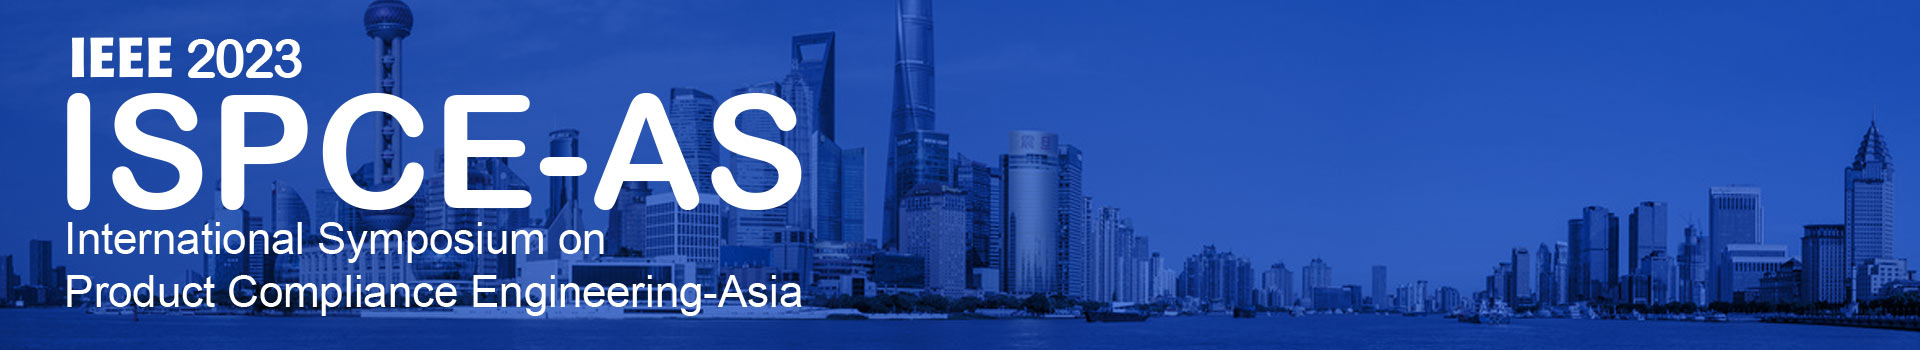 IEEE ISPCE 2023 international symposium on product safety engineering Shanghai, China